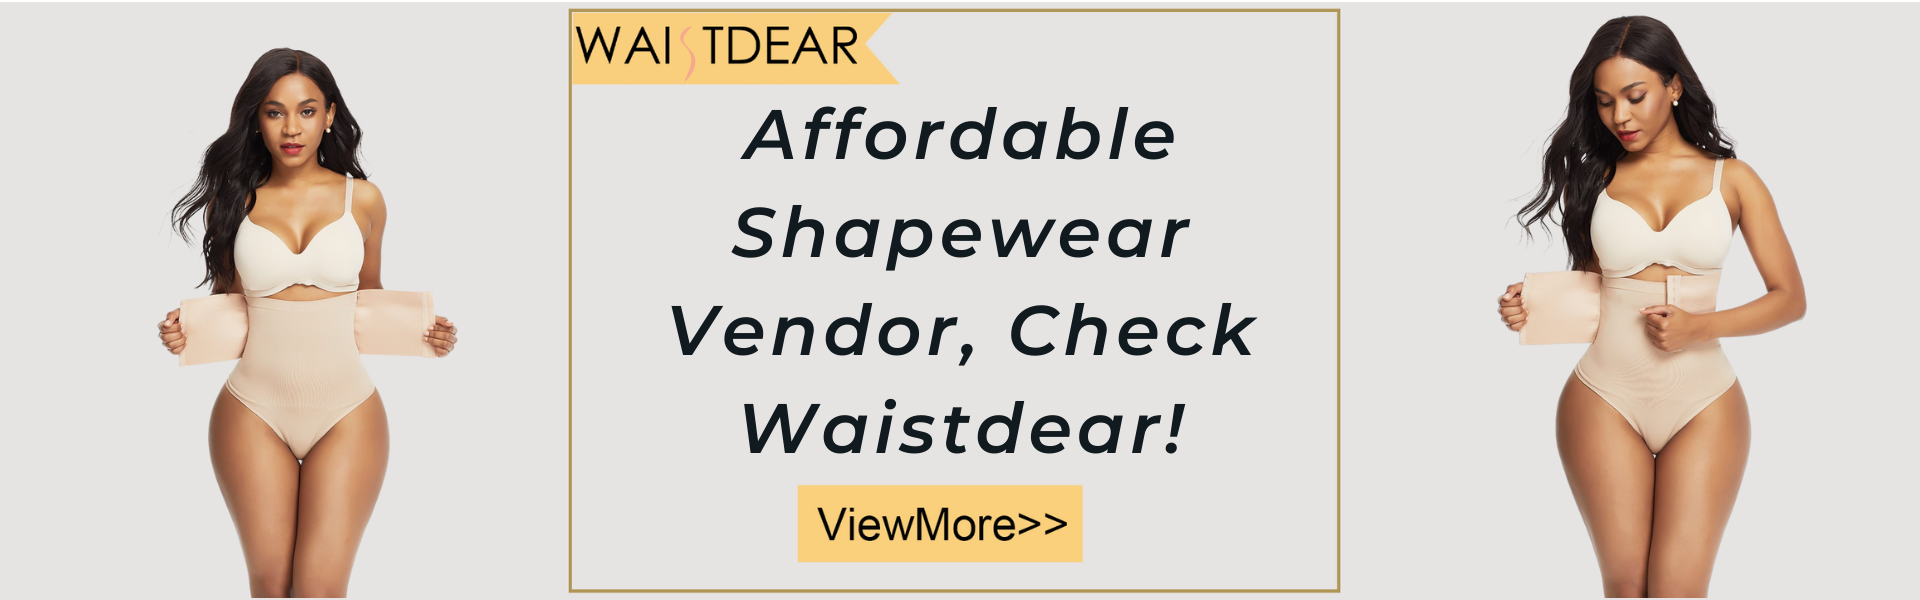 Affordable Shapewear Vendor, Check Waistdear!